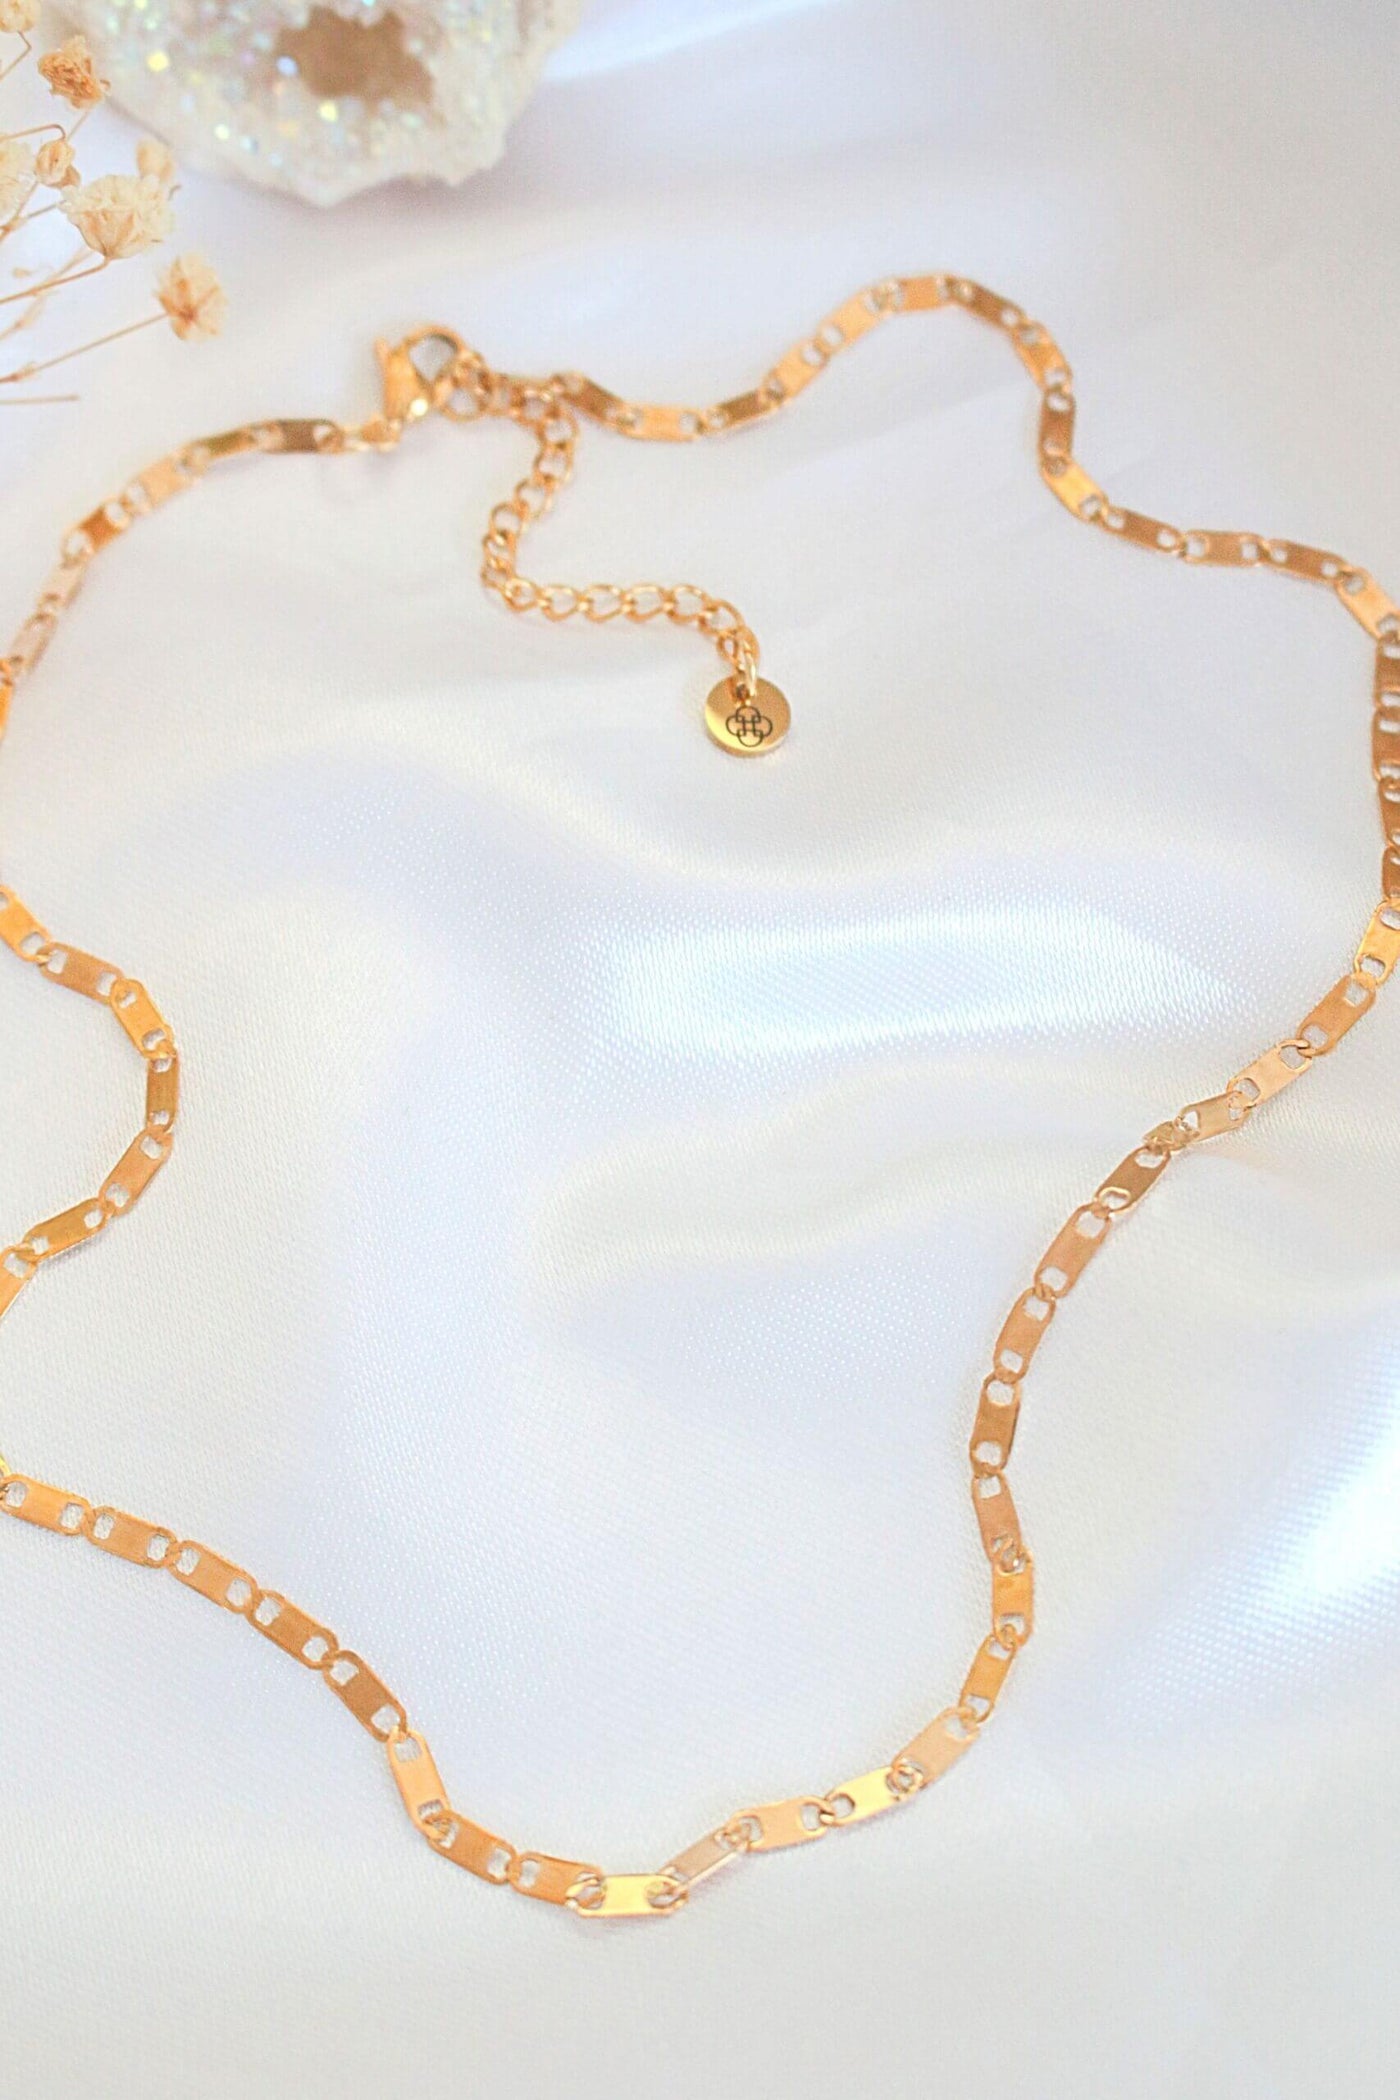 Flat link chain - choker - 24 carat gold plated